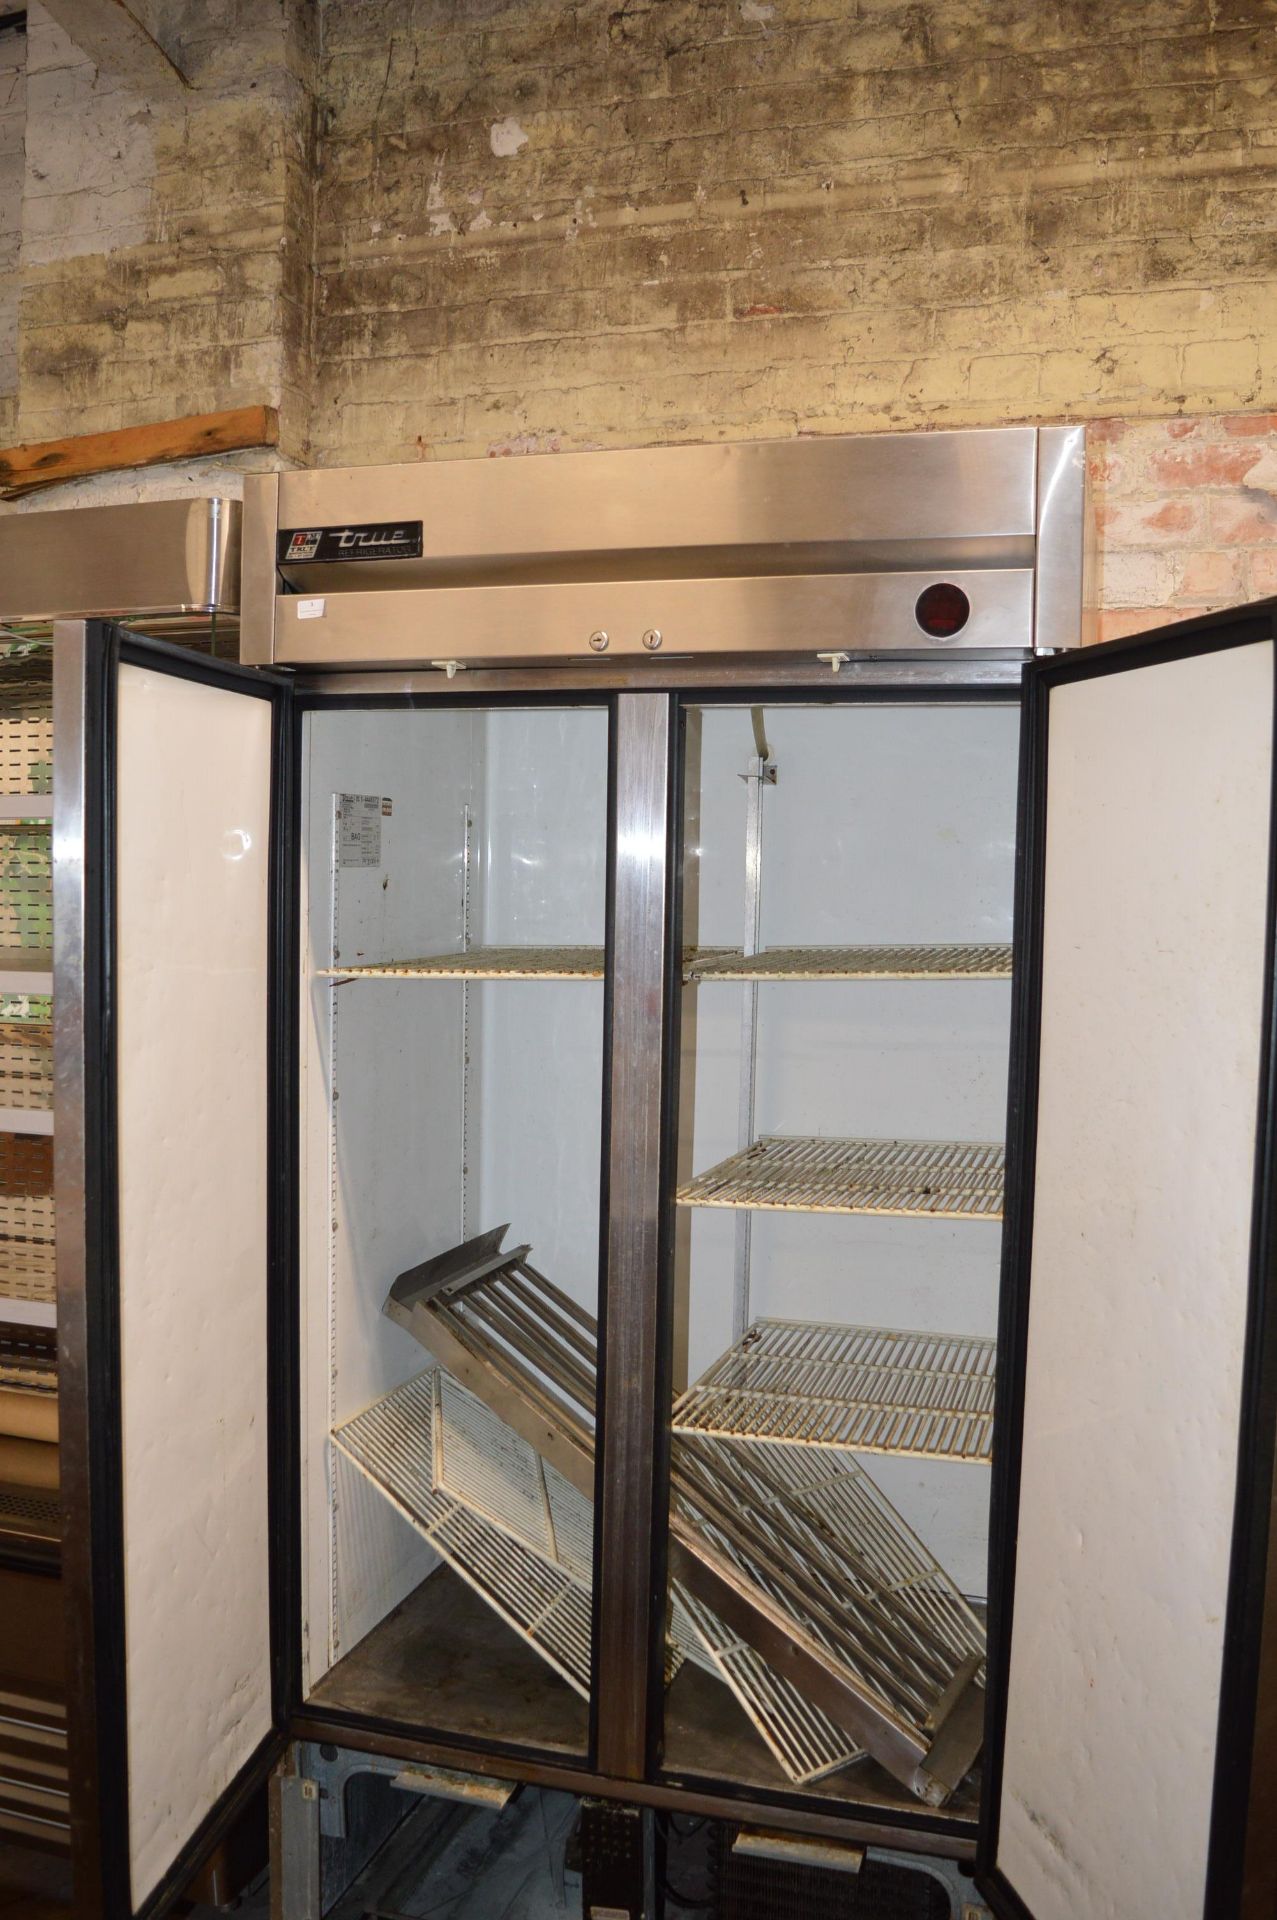 True Refrigeration Stainless Steel Double Door Refrigerator (240v) - Image 2 of 2